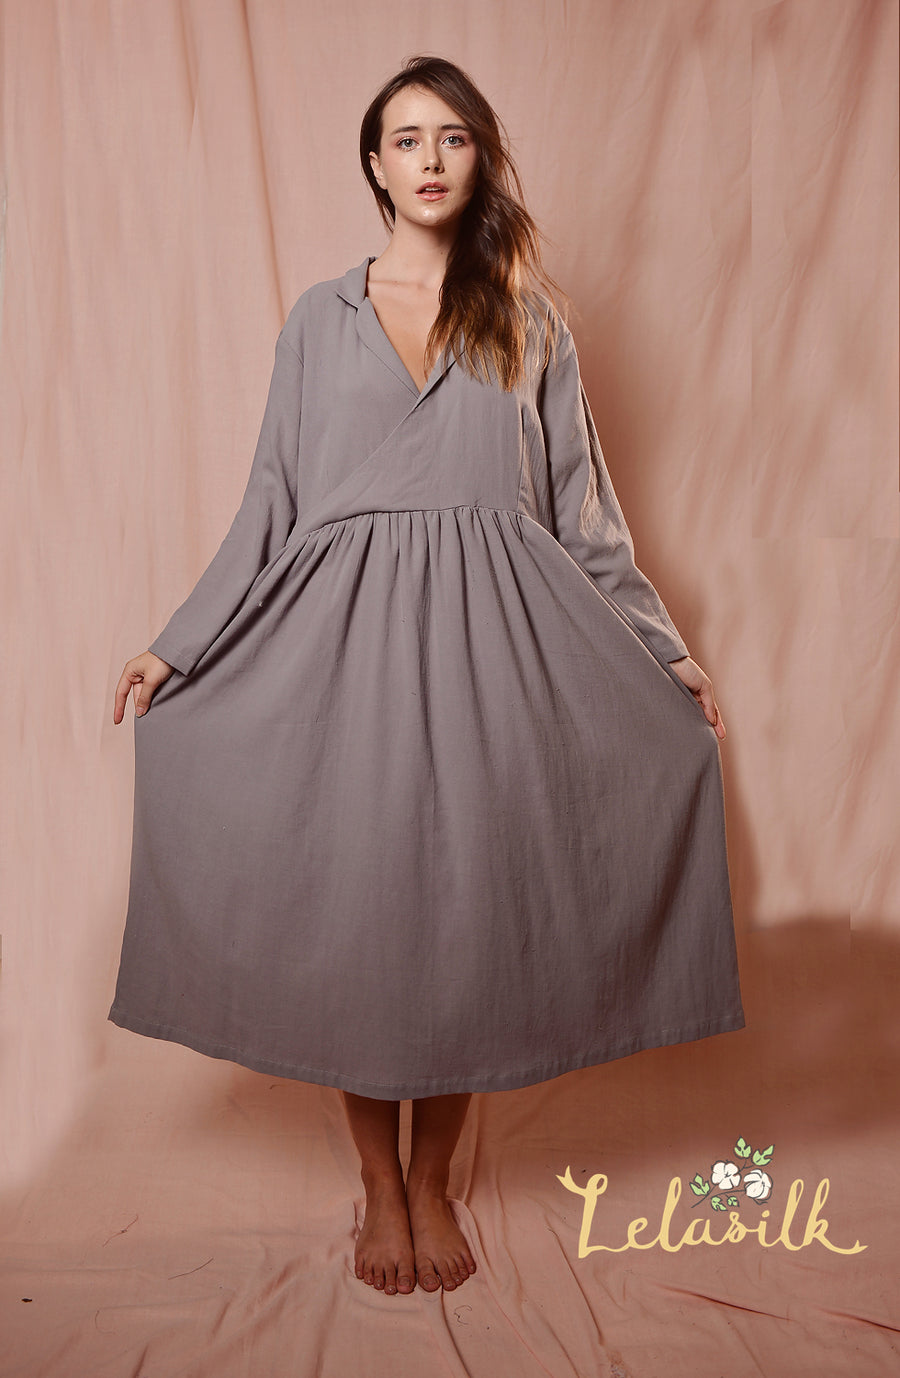 Linen Tunic Dress - Women Cotton Tunic - Summer Loose Caftan